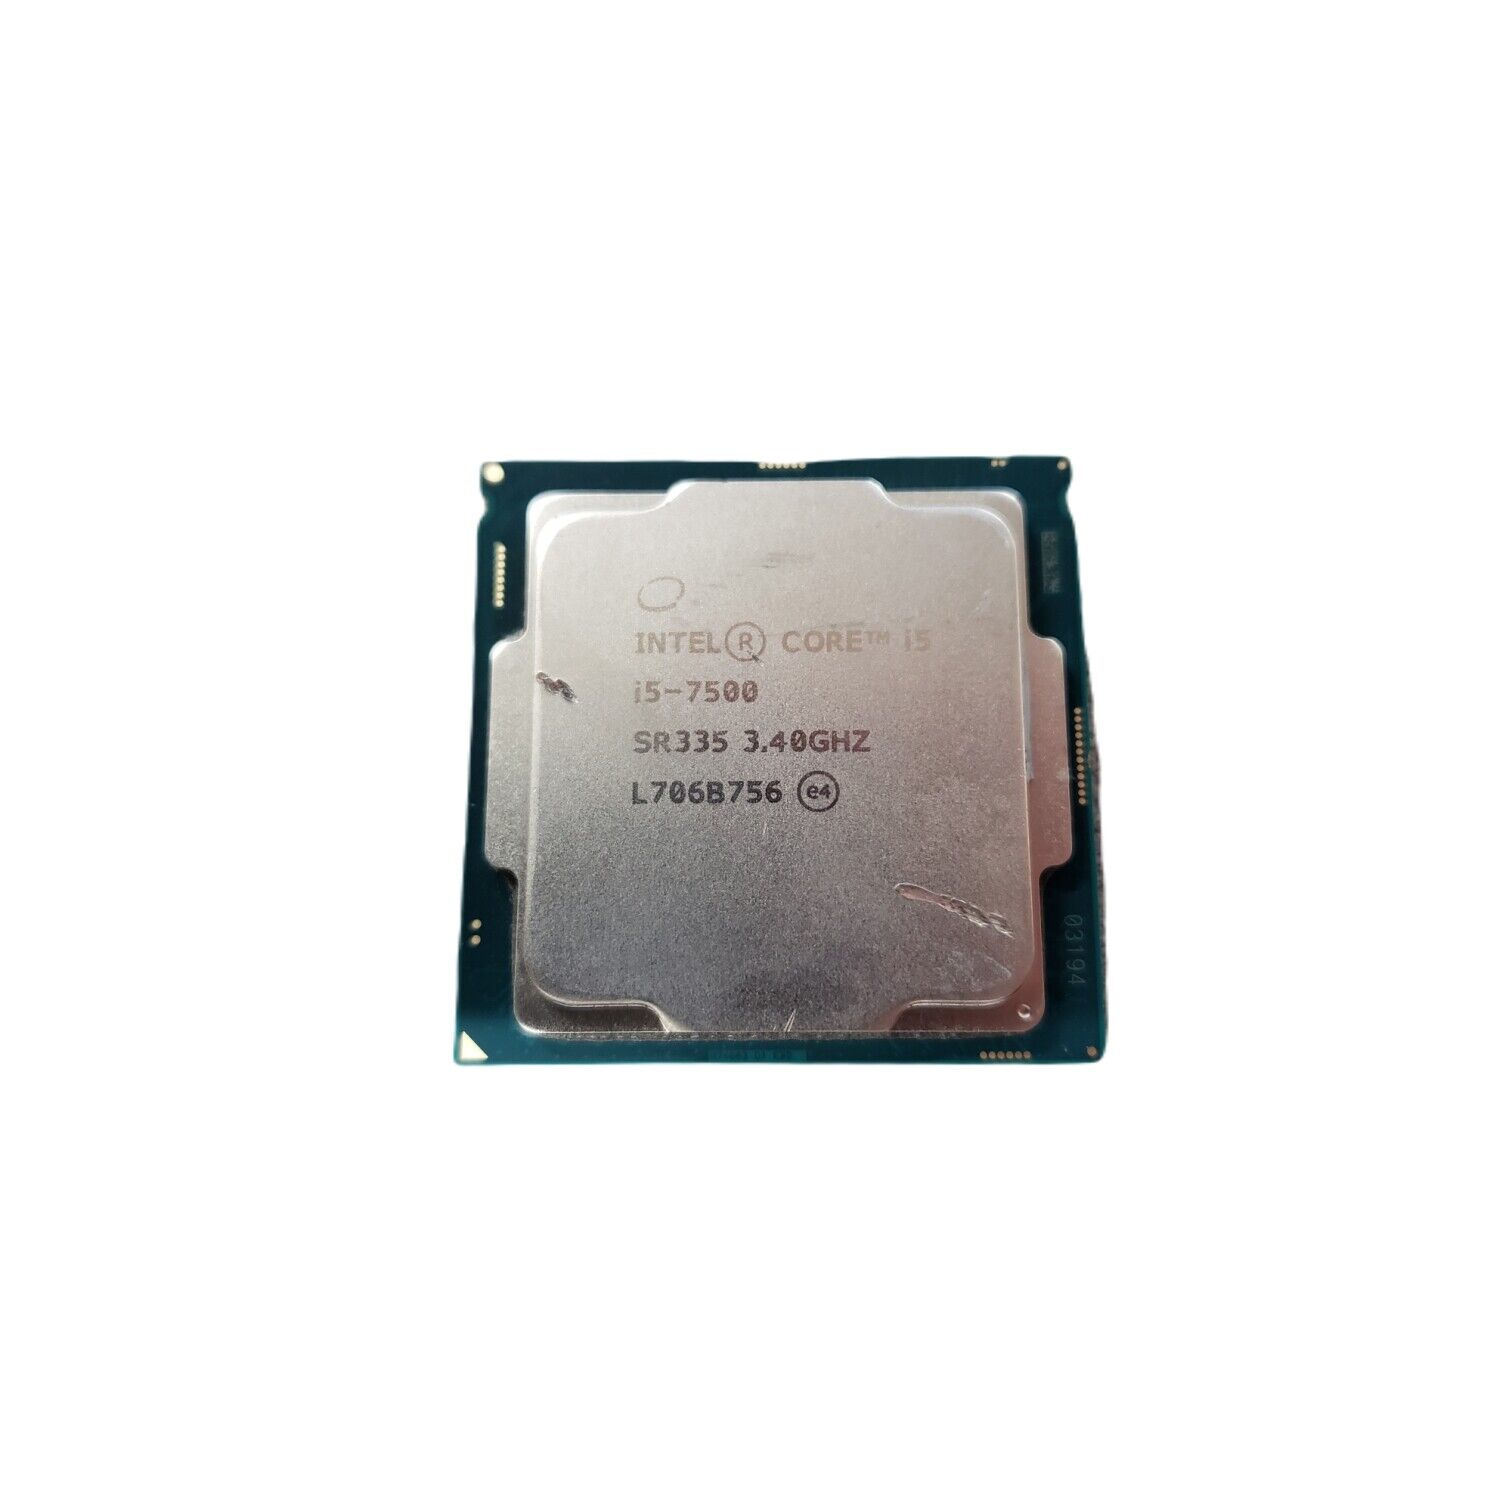 [ Lot Of 7 ] Intel i5-7500 SR335 3.40GHZ Processor